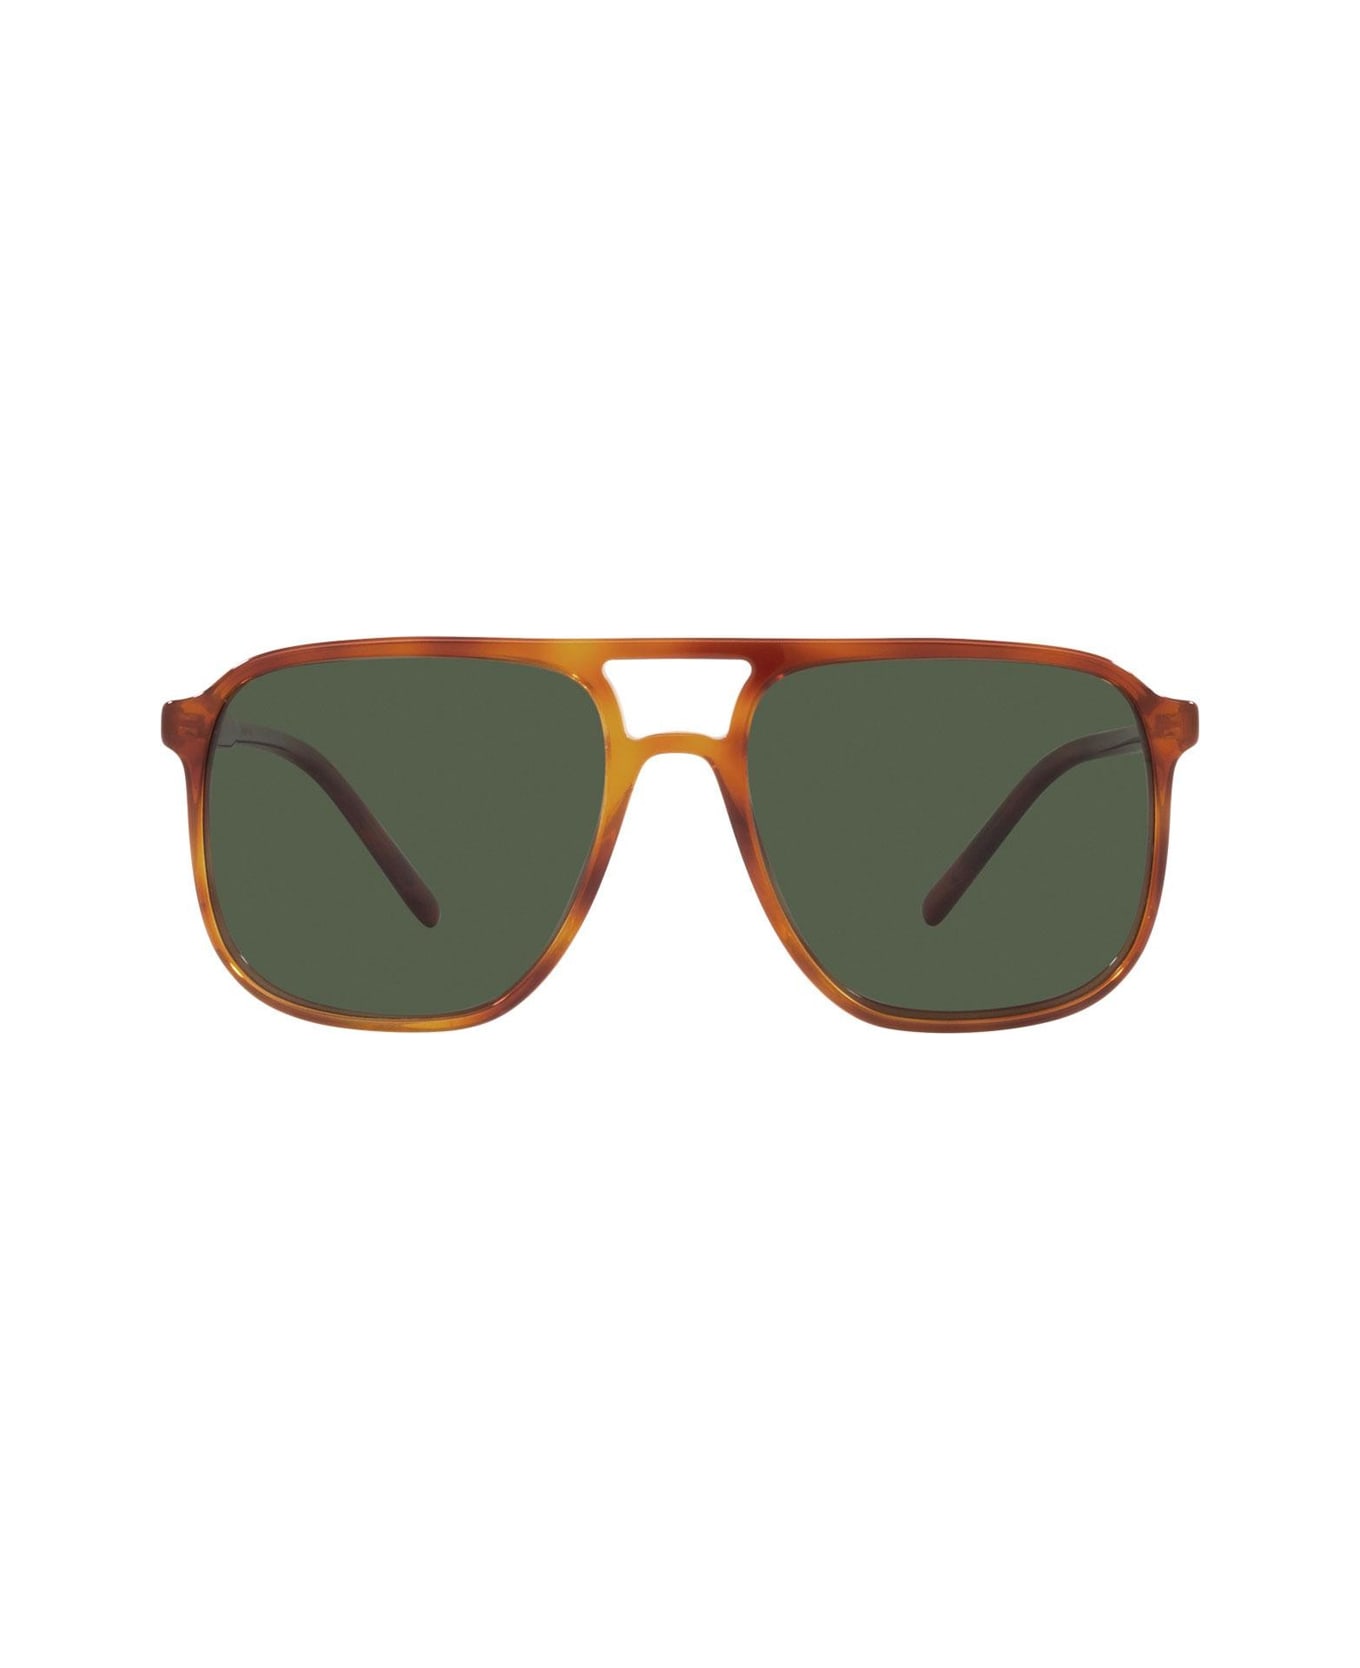 Dolce & Gabbana Eyewear Dg4423 705/9a Sunglasses - Arancione